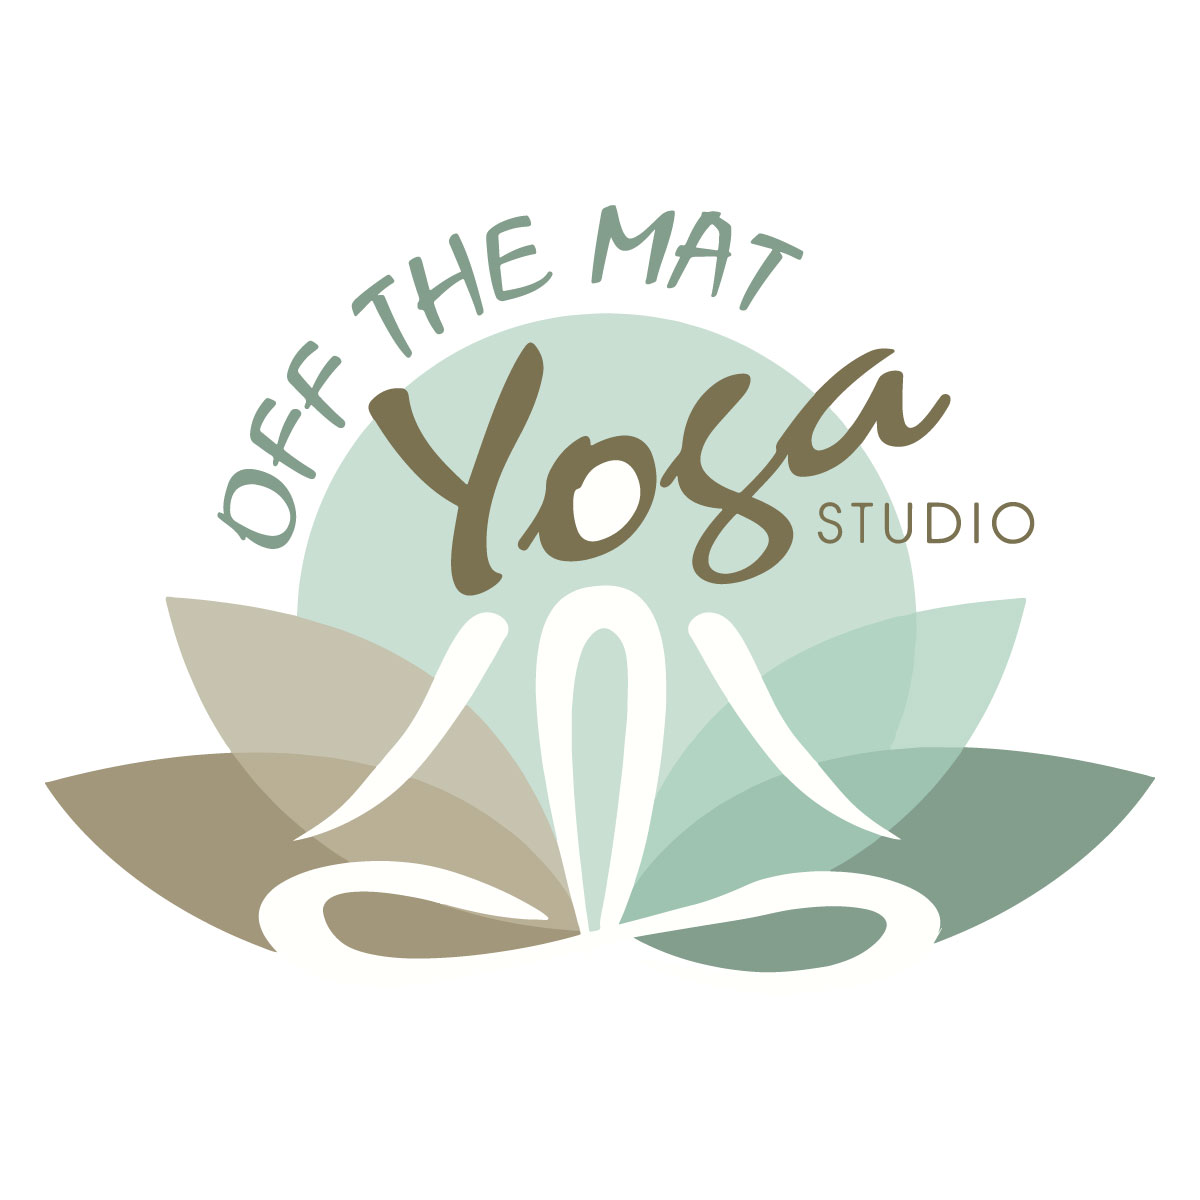 Off The Mat Yoga